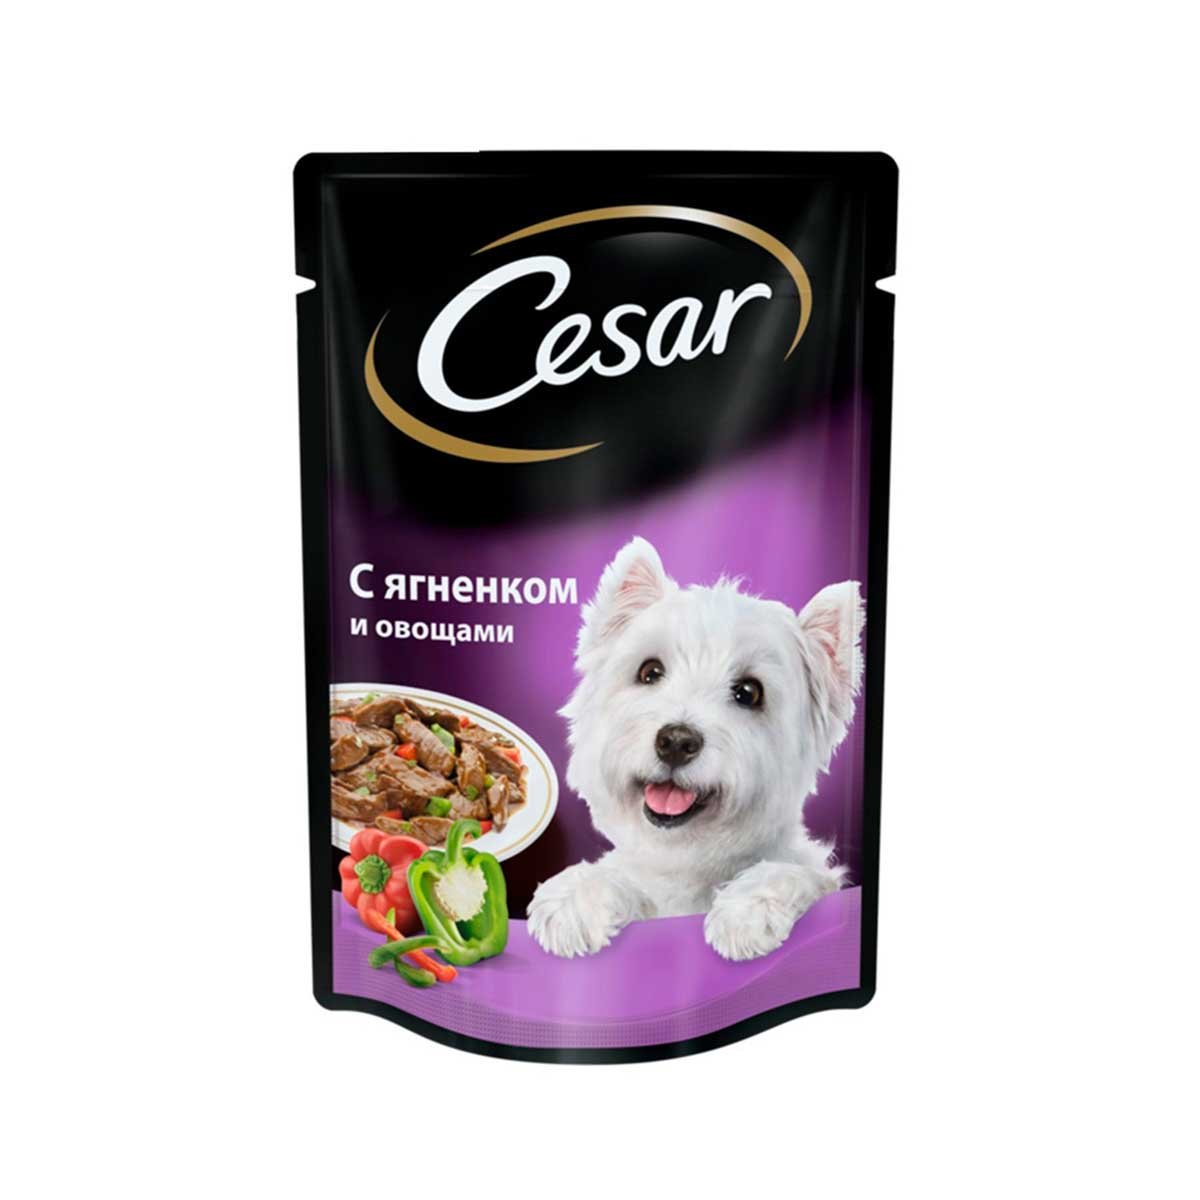 Корм для собак сердце. Влажный корм для собак Cesar. Сезар корм влажный для собак. Cesar д/с жаркое с уткой м/п 85г/28. Cesar для собак 85г.